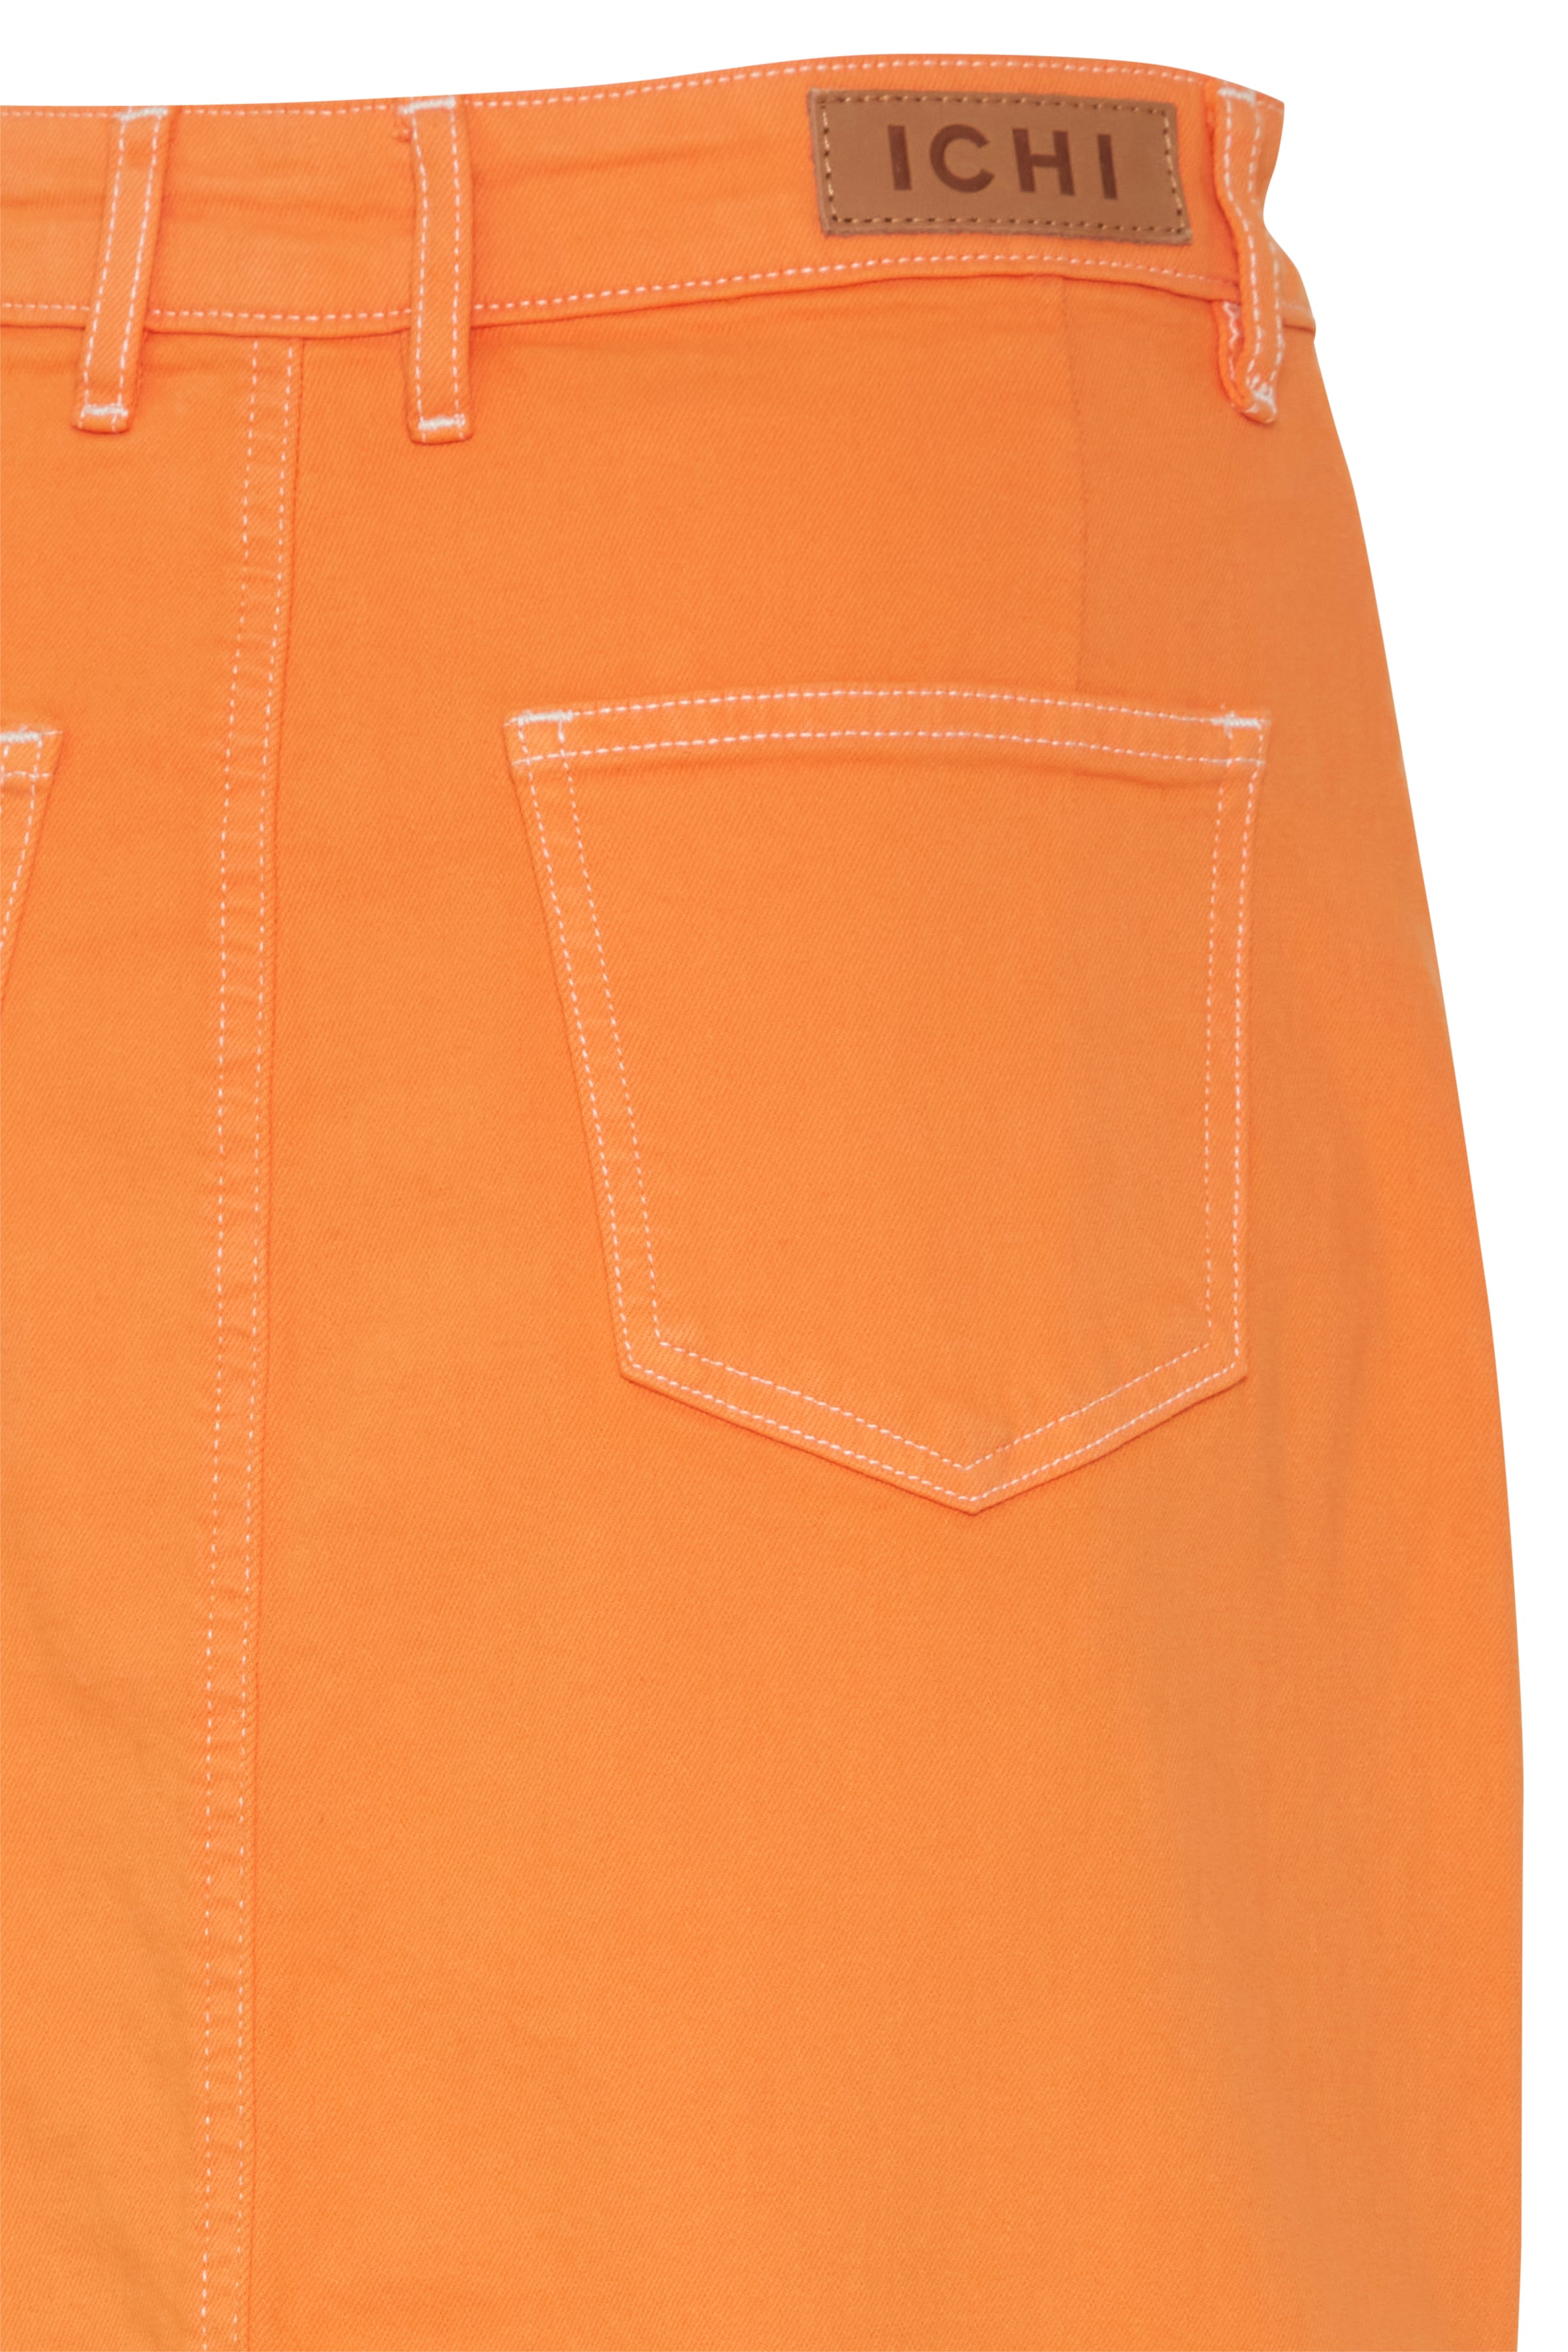 Cenny Skirt Persimmon Orange